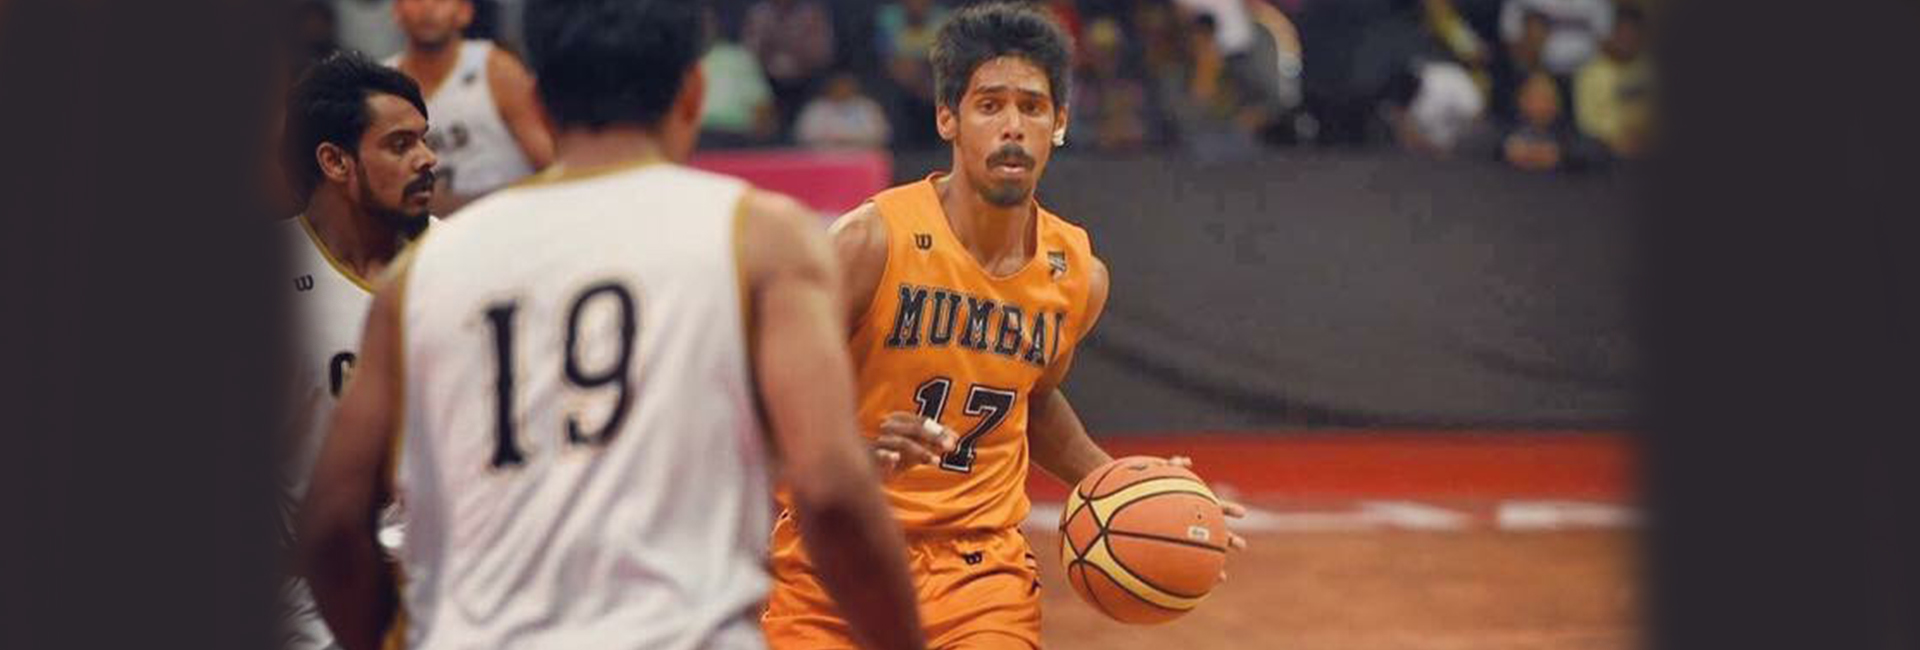 Slam dunk: India, Spanje of de VS, basketbalprof Prudhvi Reddy 'schiet' overal op los